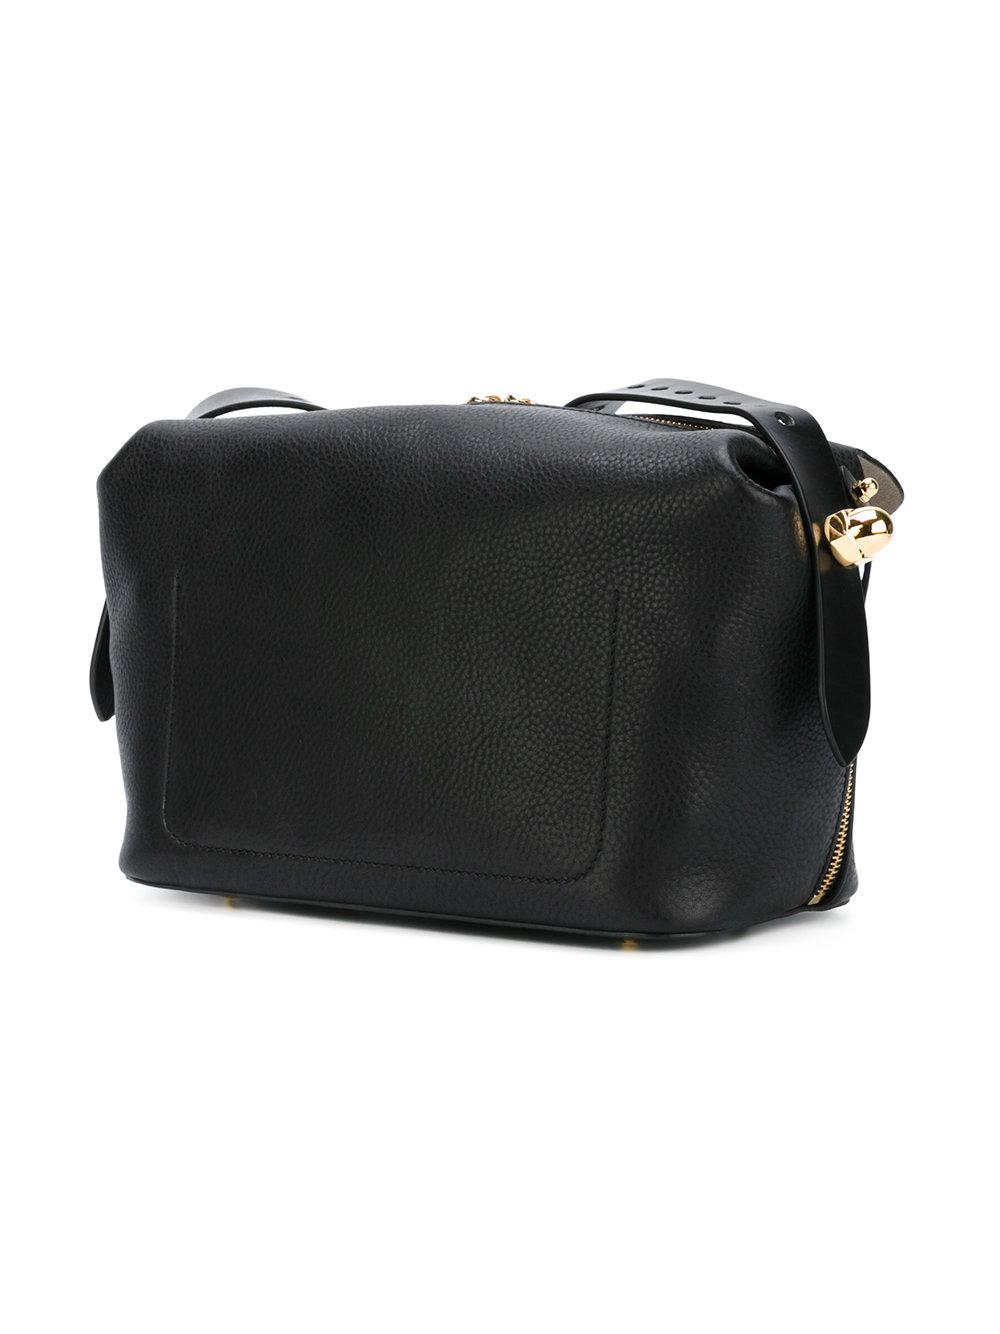 Pugnetti Leather Parma Shoulder Bag in Black - Lyst